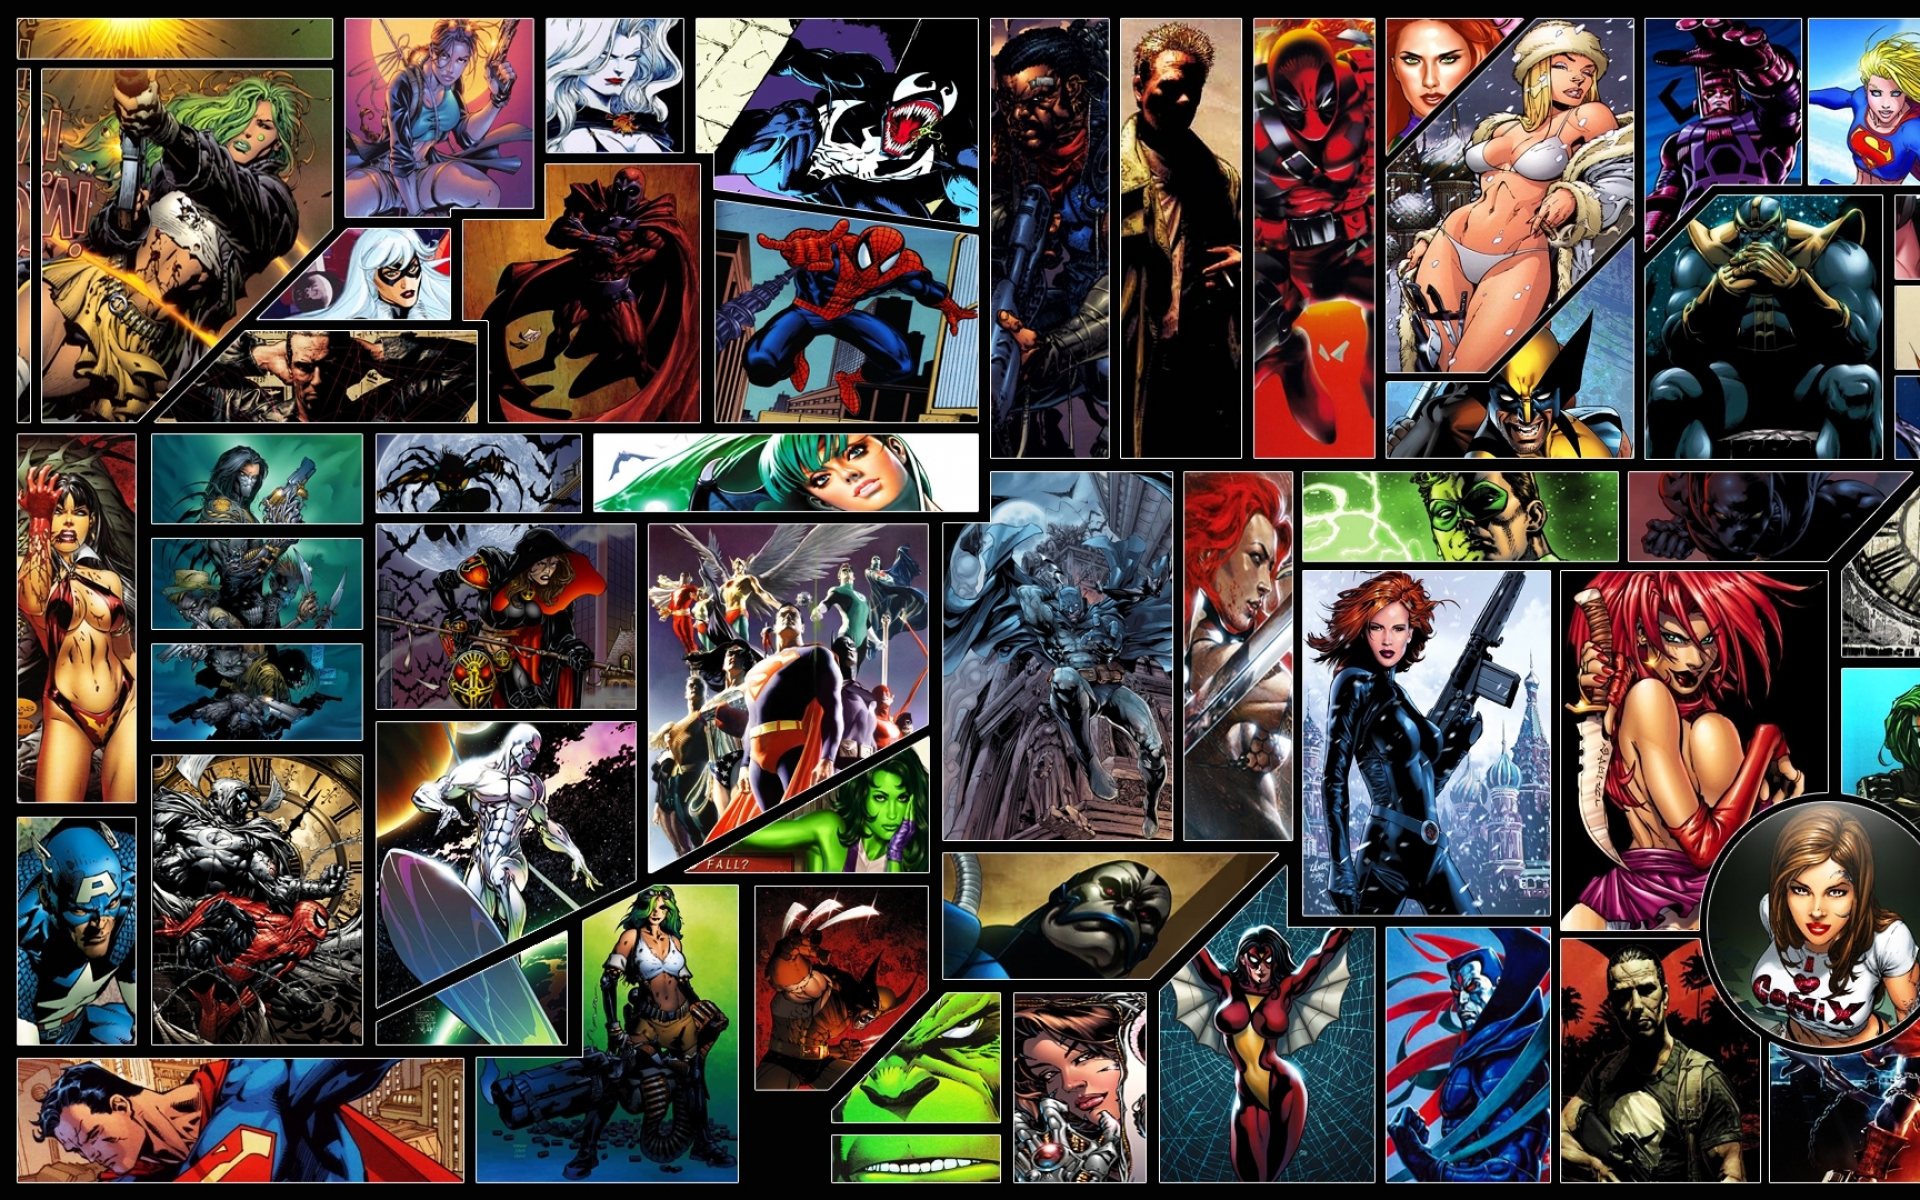 tomb raider, deadpool, justice league, collage, witchblade, comics, aphrodite ix (comics), apocalypse (marvel comics), bishop (marvel comics), black cat (marvel comics), black widow, captain america, dc comics, elektra (marvel comics), galactus, green lantern, hal jordan, hawkgirl (dc comics), hawkman (dc comics), hulk, katar hol, lady death, magneto (marvel comics), mary jane watson, mister sinister, moon knight, punisher, red sonja, shayera hol, she hulk, silver surfer, spider man, spider woman, supergirl, superman, thanos, the darkness, vampirella, venom, wolverine, wonder woman wallpaper for mobile